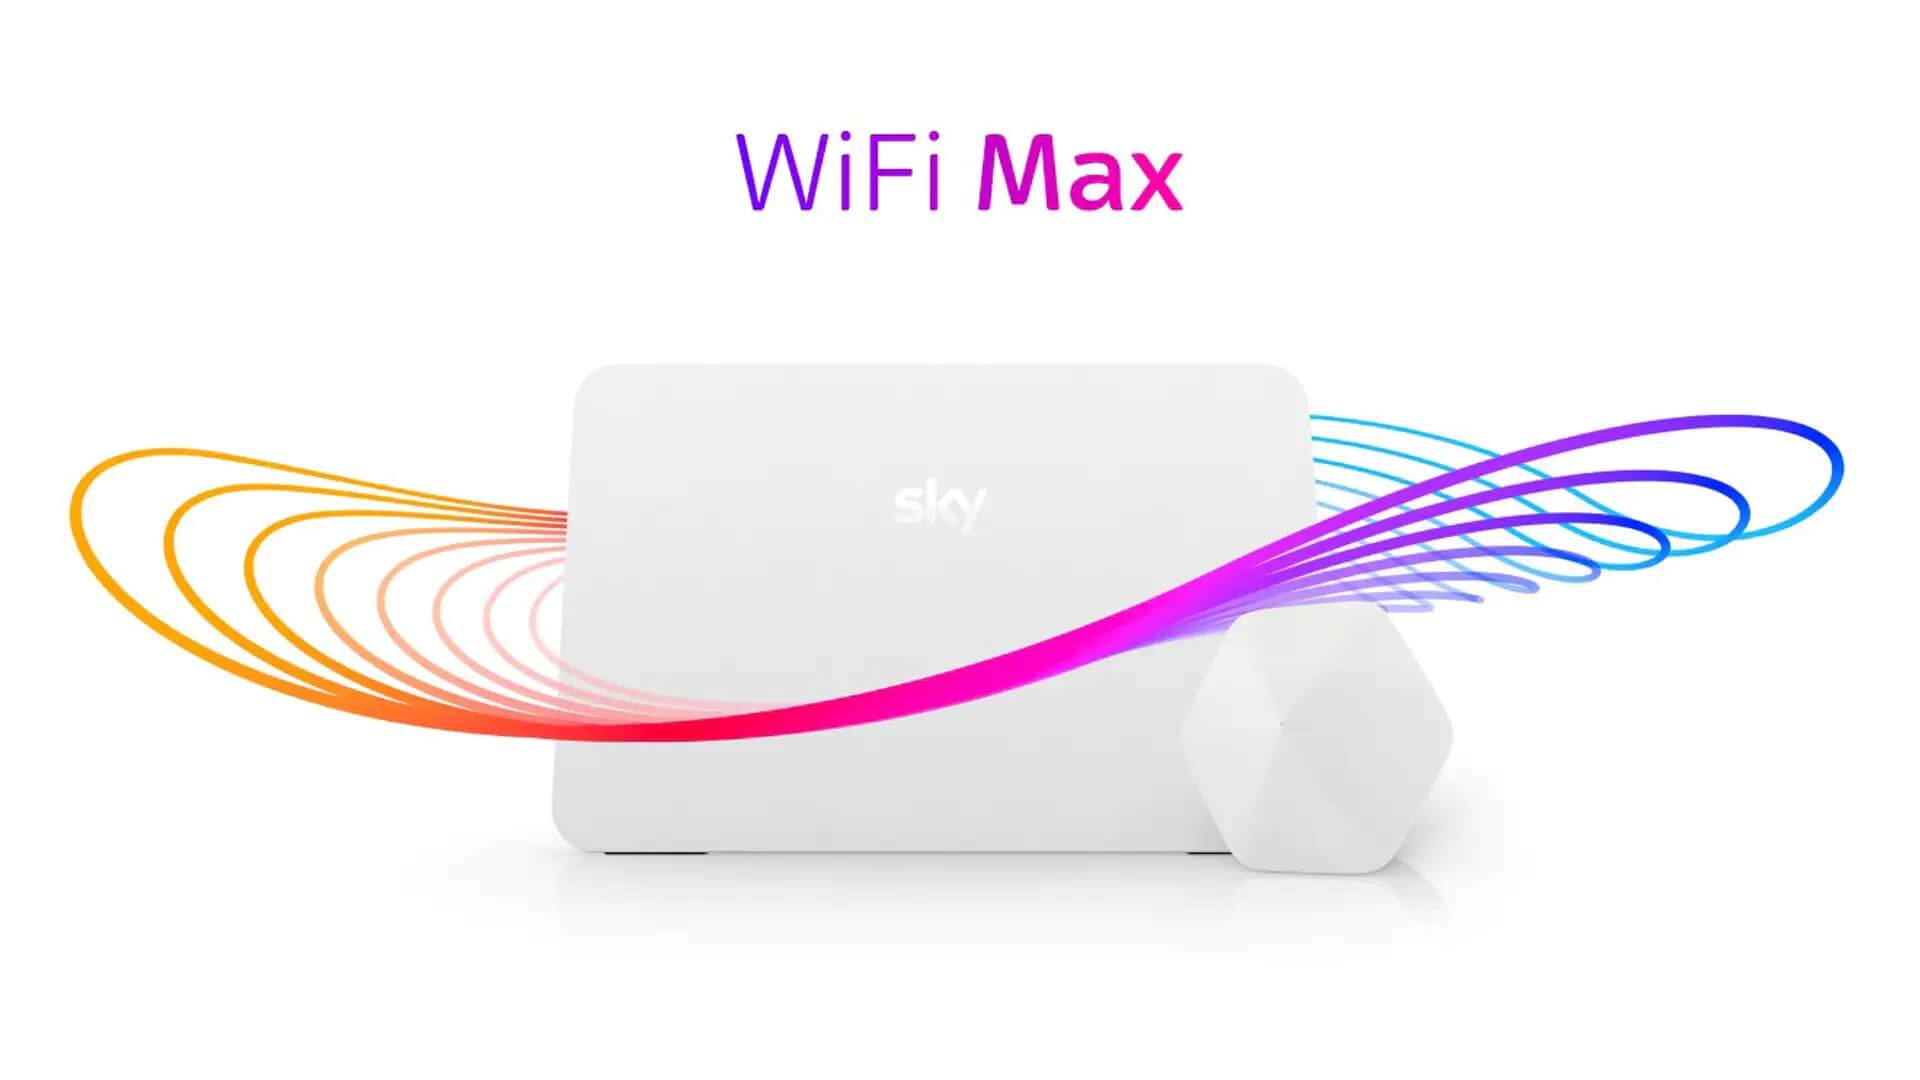 Sky WiFi Max